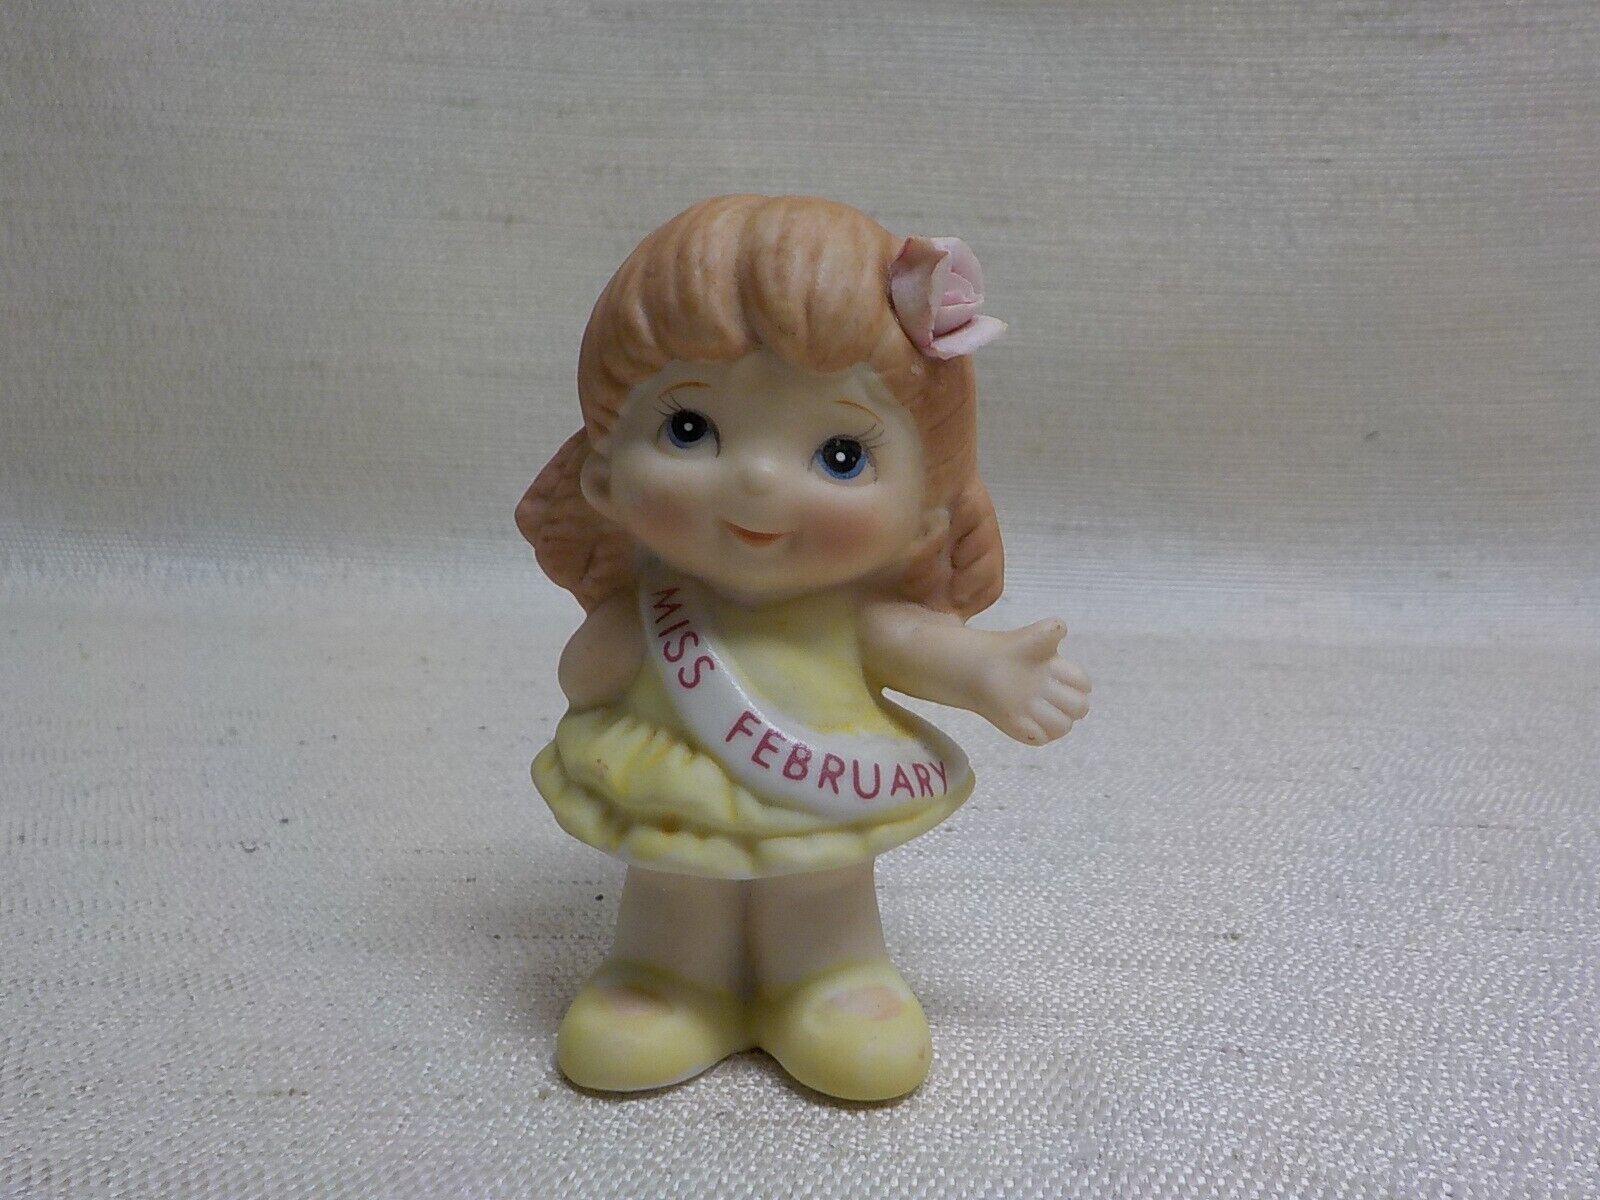 Vintage Tiny Miss February Porcelain Figurine Yellow Dress Shoes Ringlets